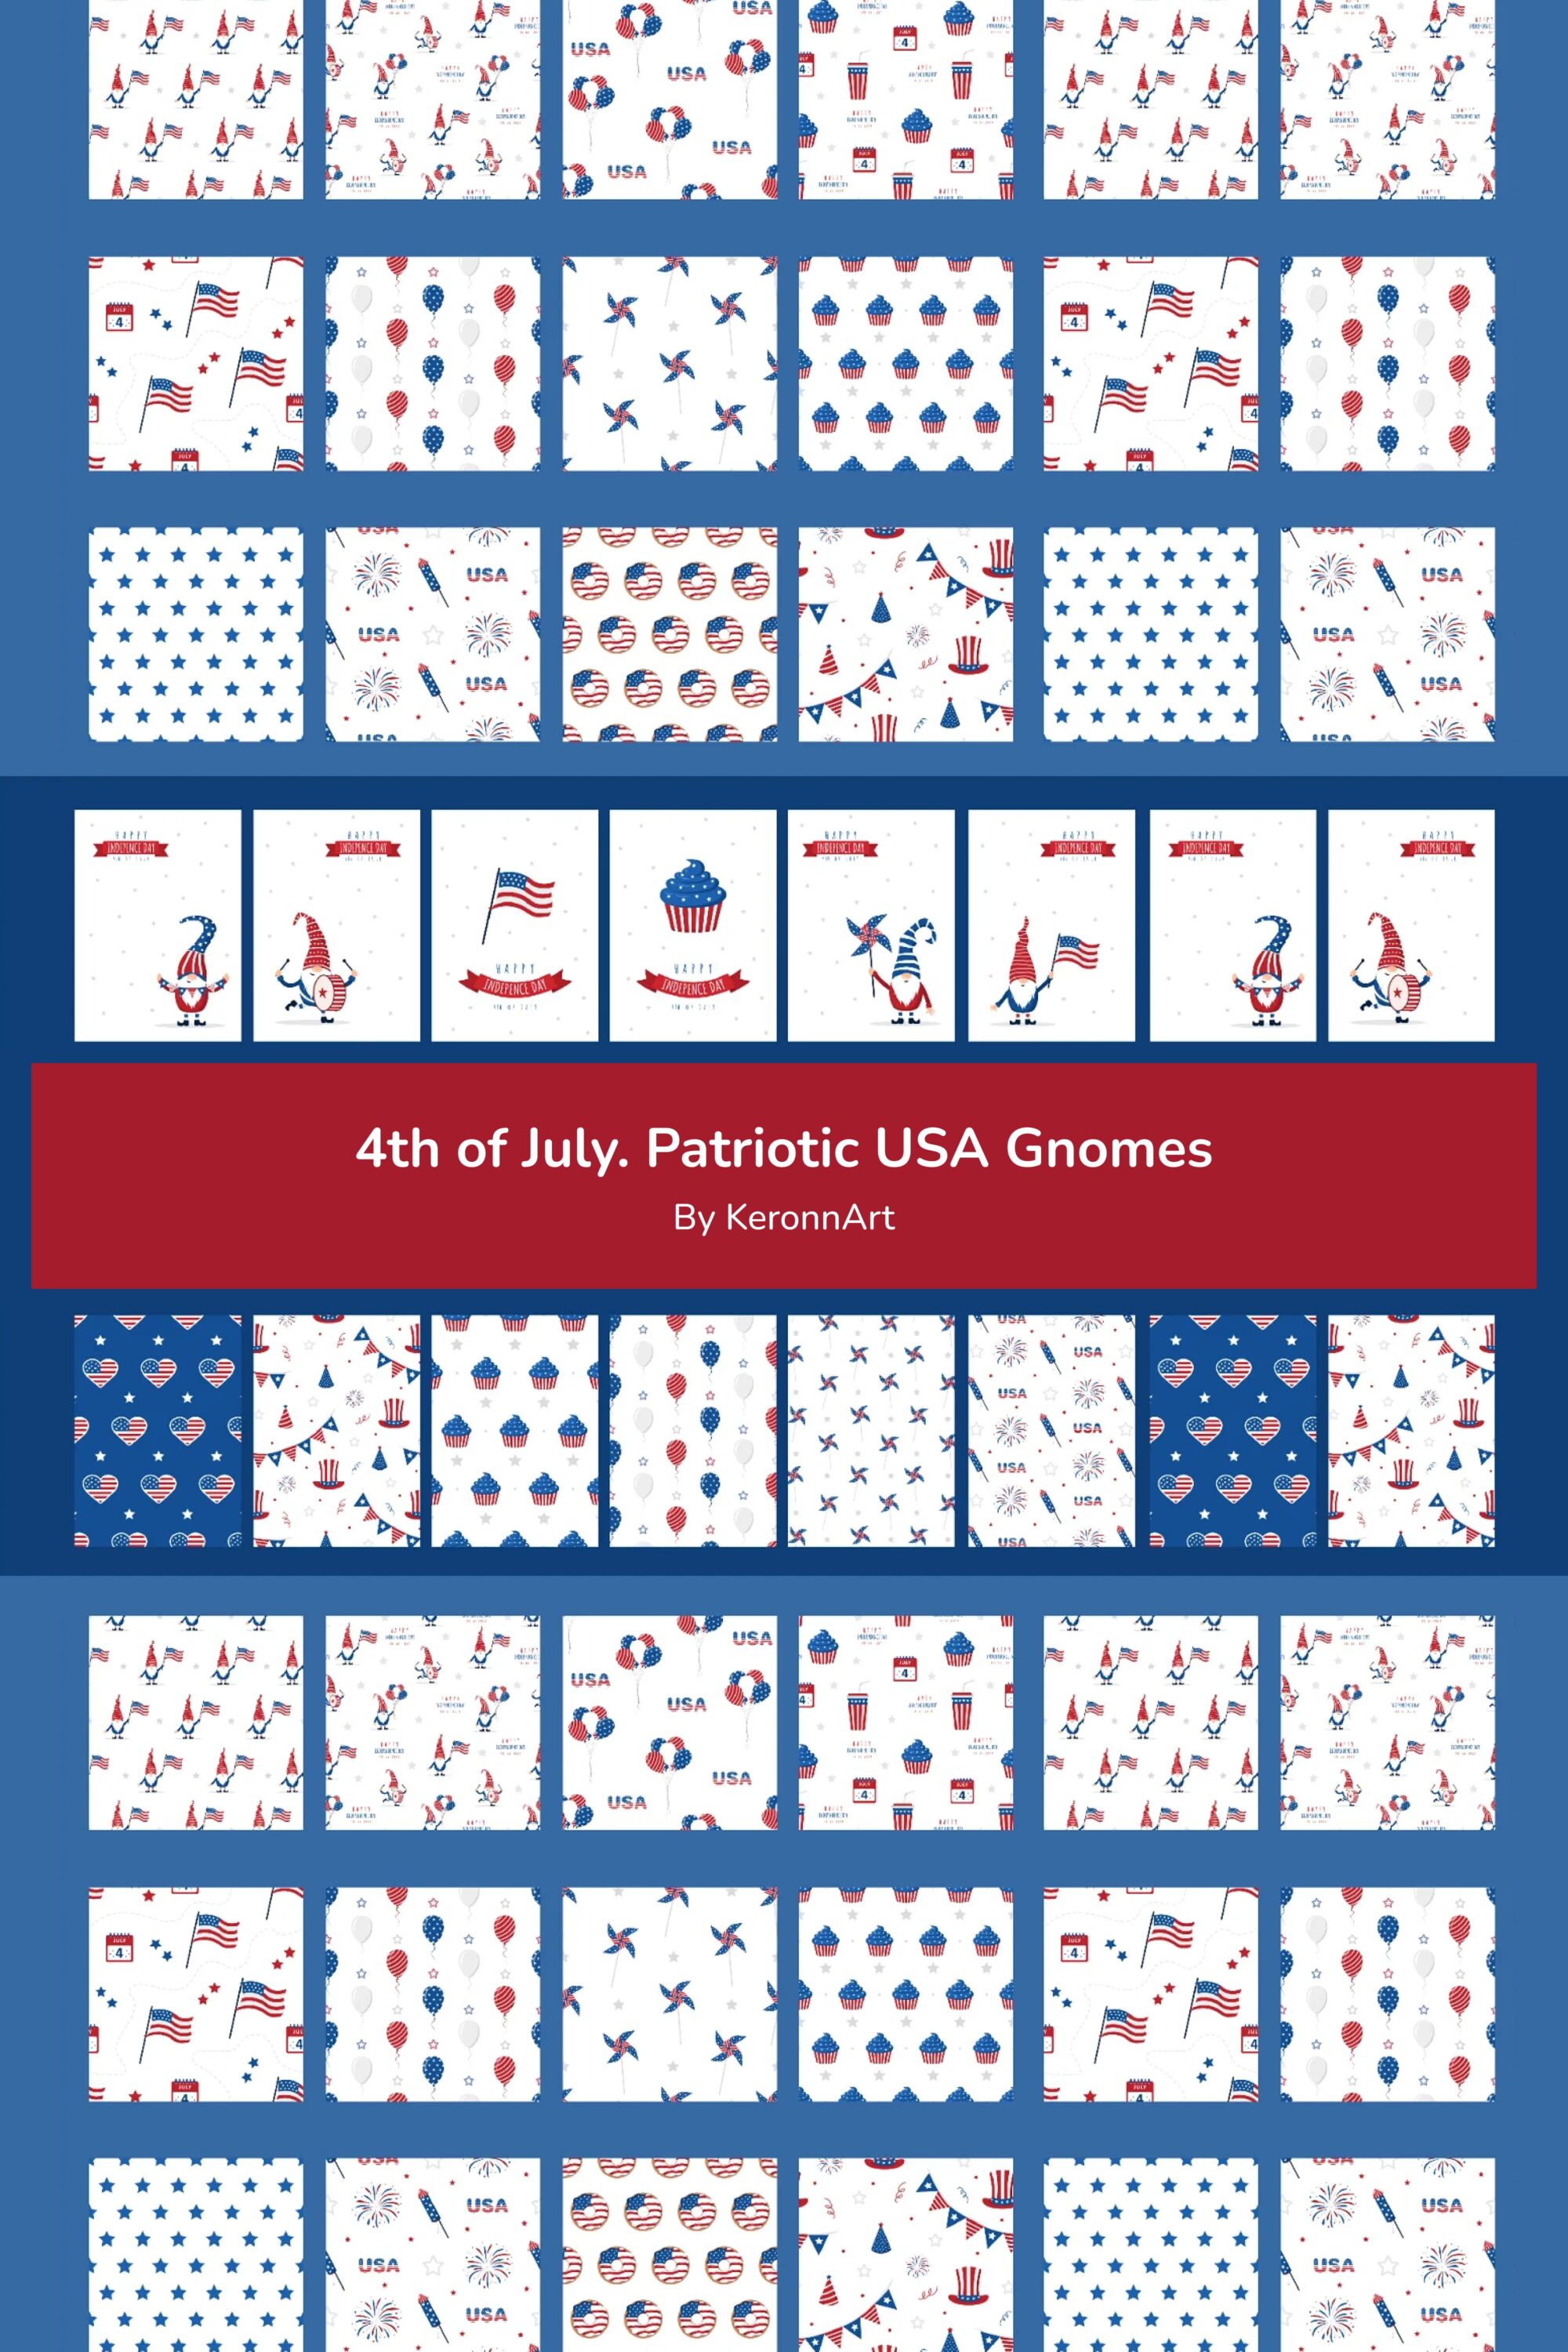 4th of July. Patriotic USA Gnomes pinterest image.